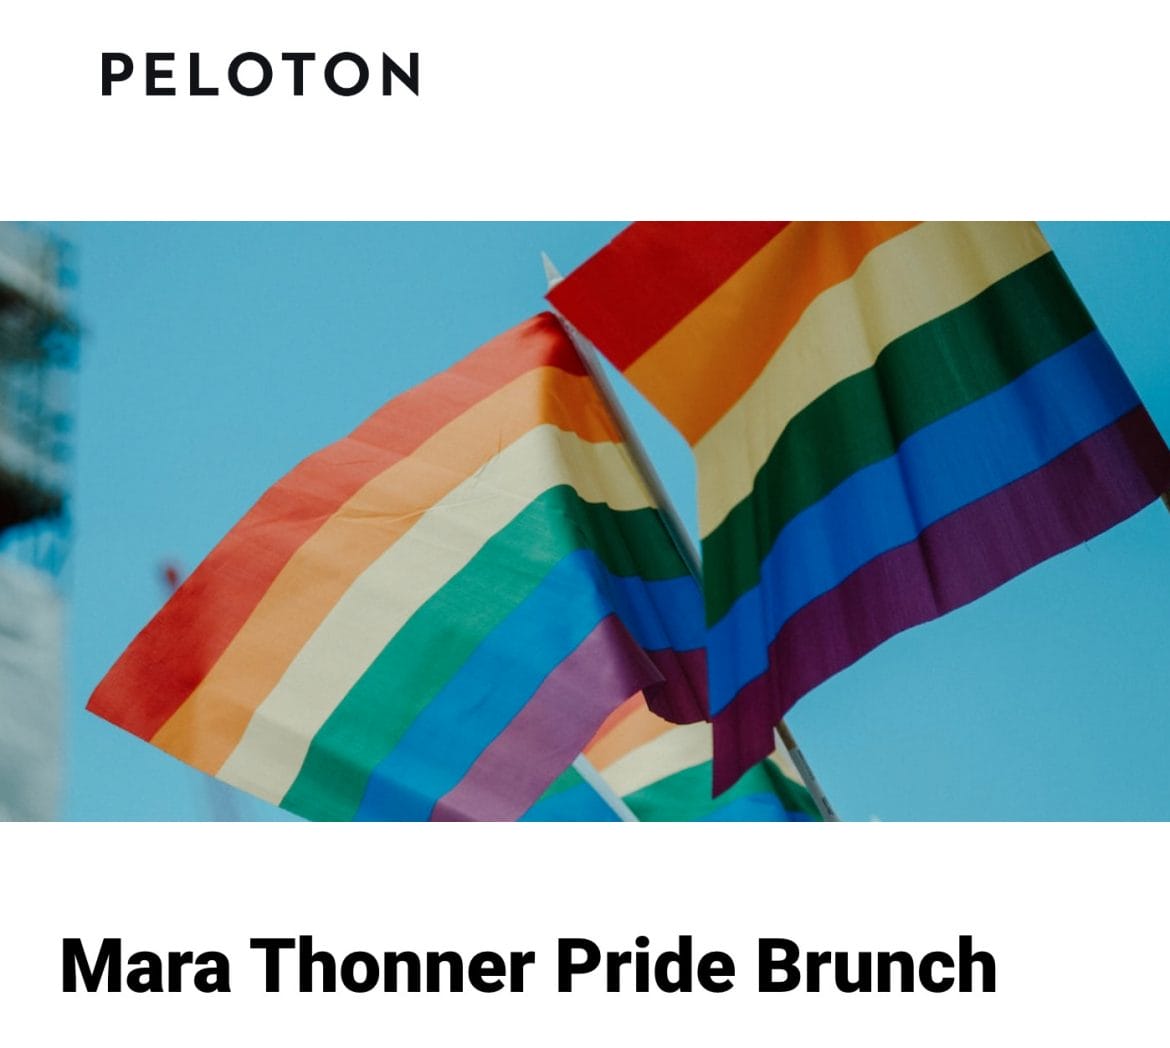 Peloton Pride Brunch with Mara Thonner - AKA Peloton instructor Matty Maggiacomo.